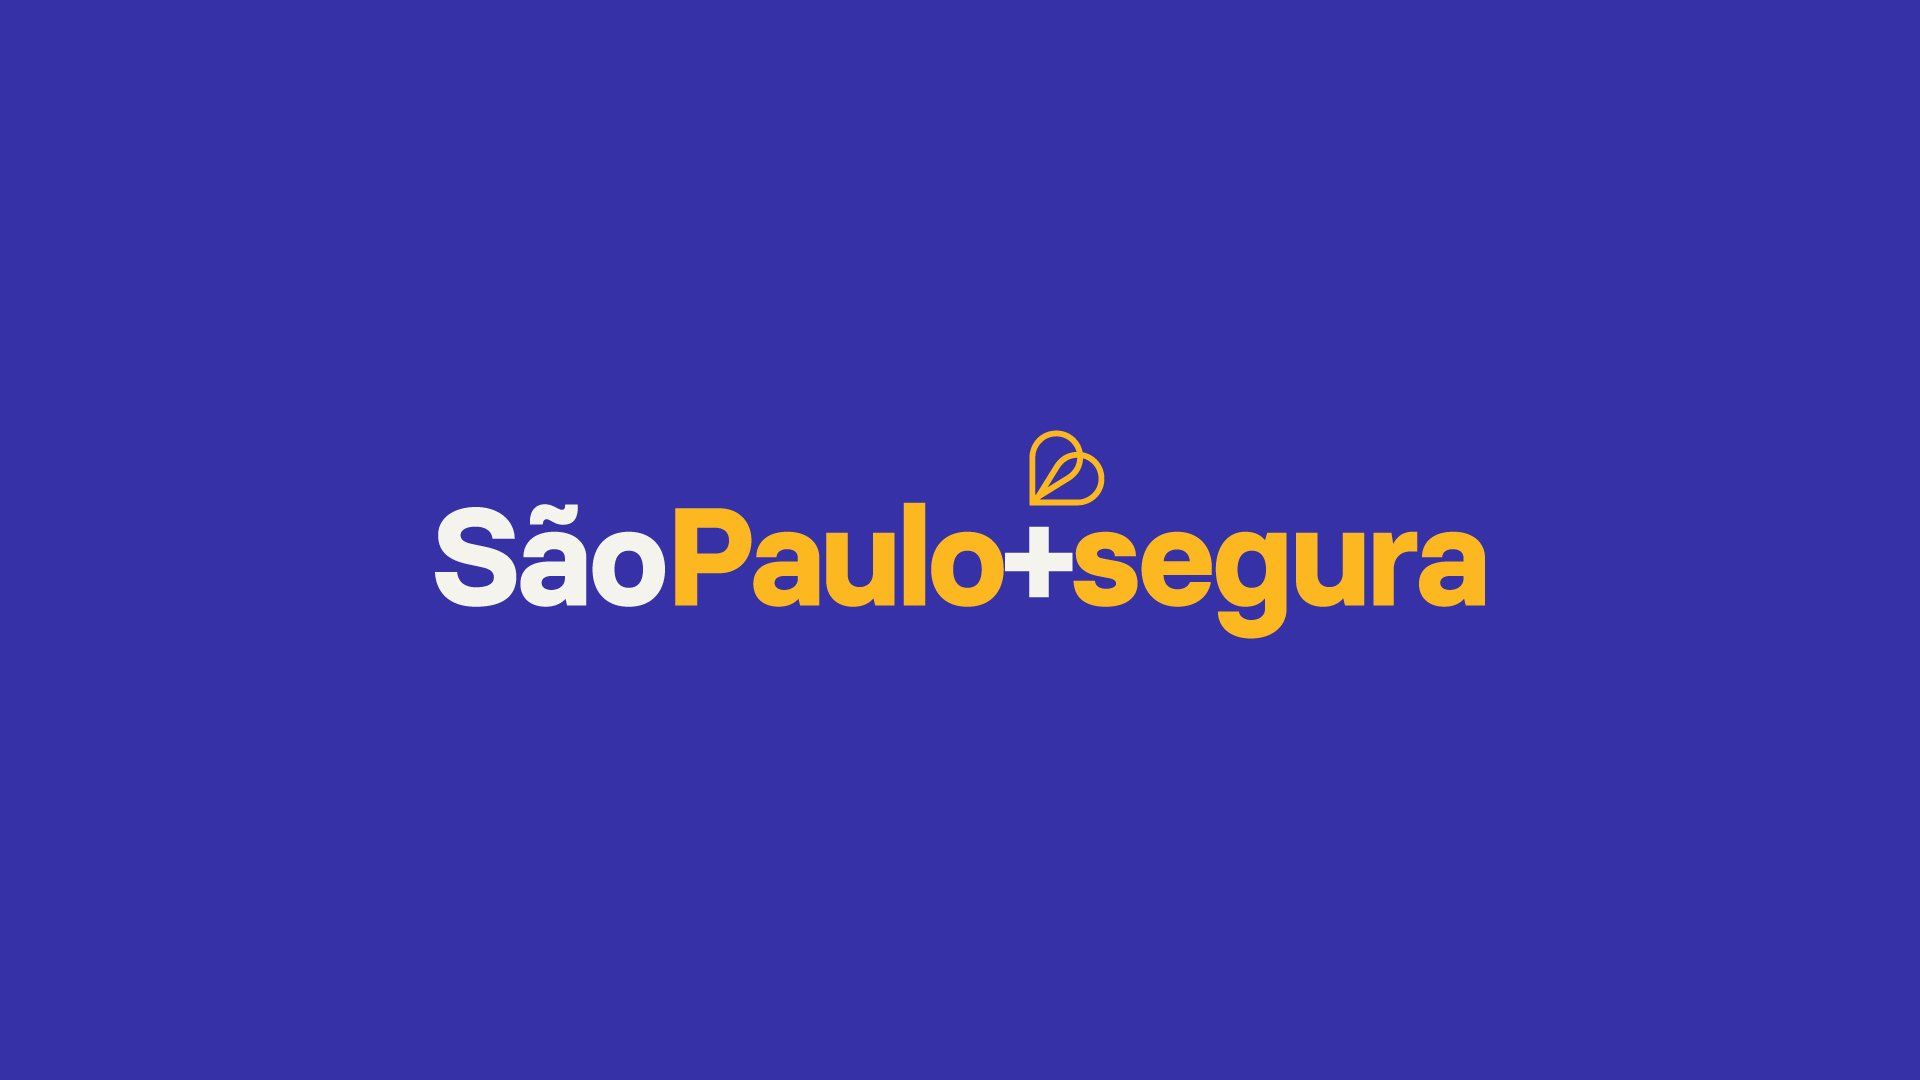 Onde estamos & onde vamos – São Paulo + segura